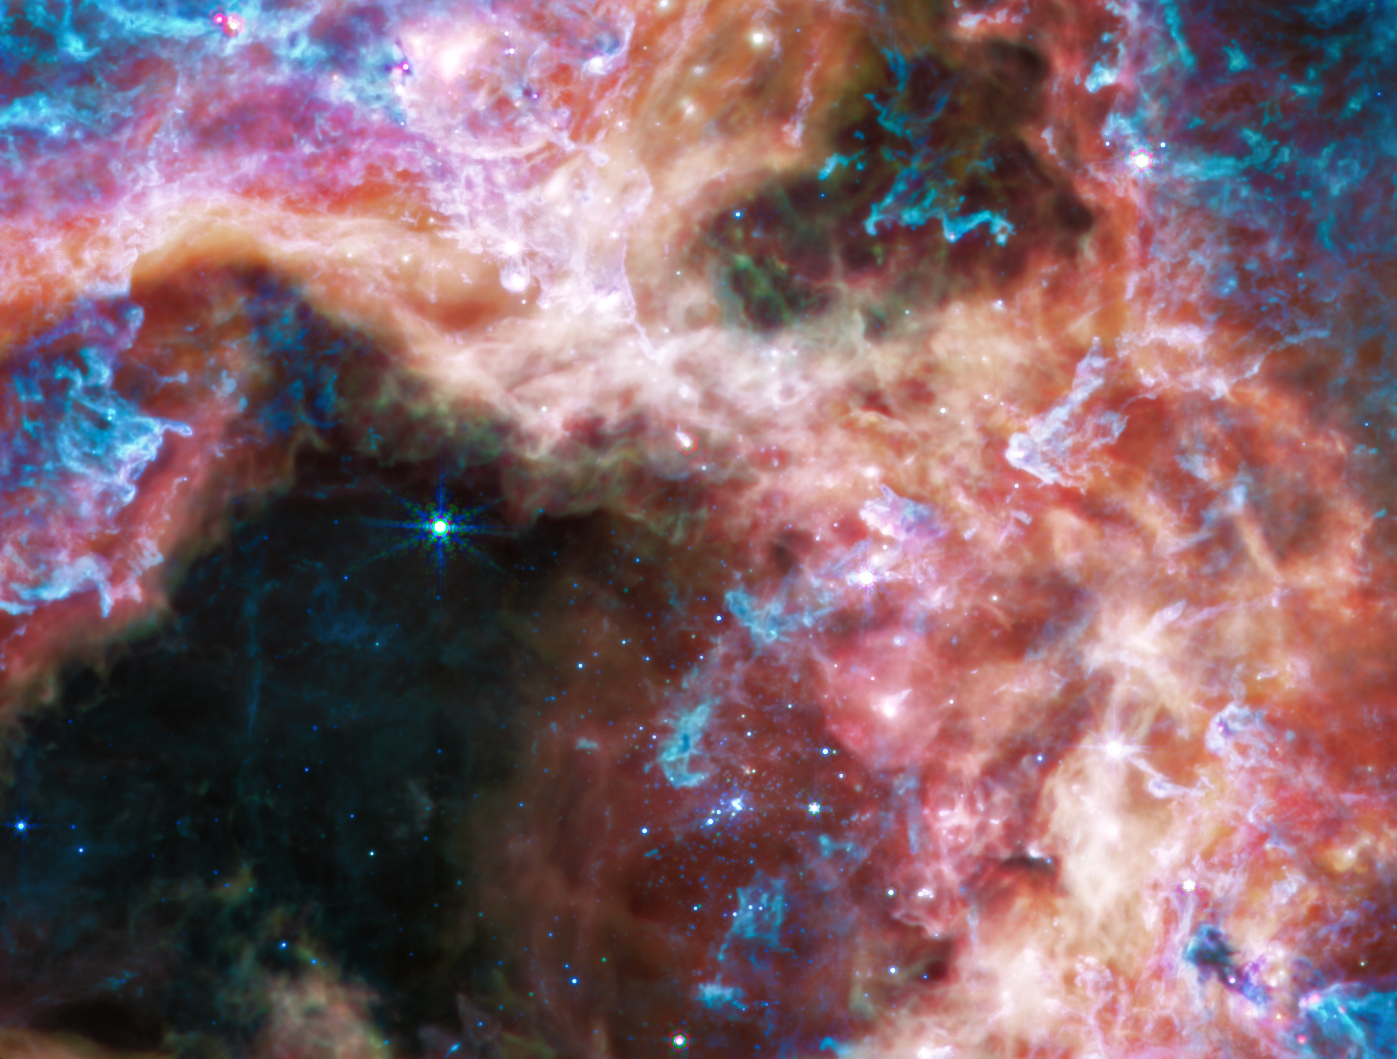 The James Webb Space Telescope opens spooky season with stunning images of Tarantula nebula